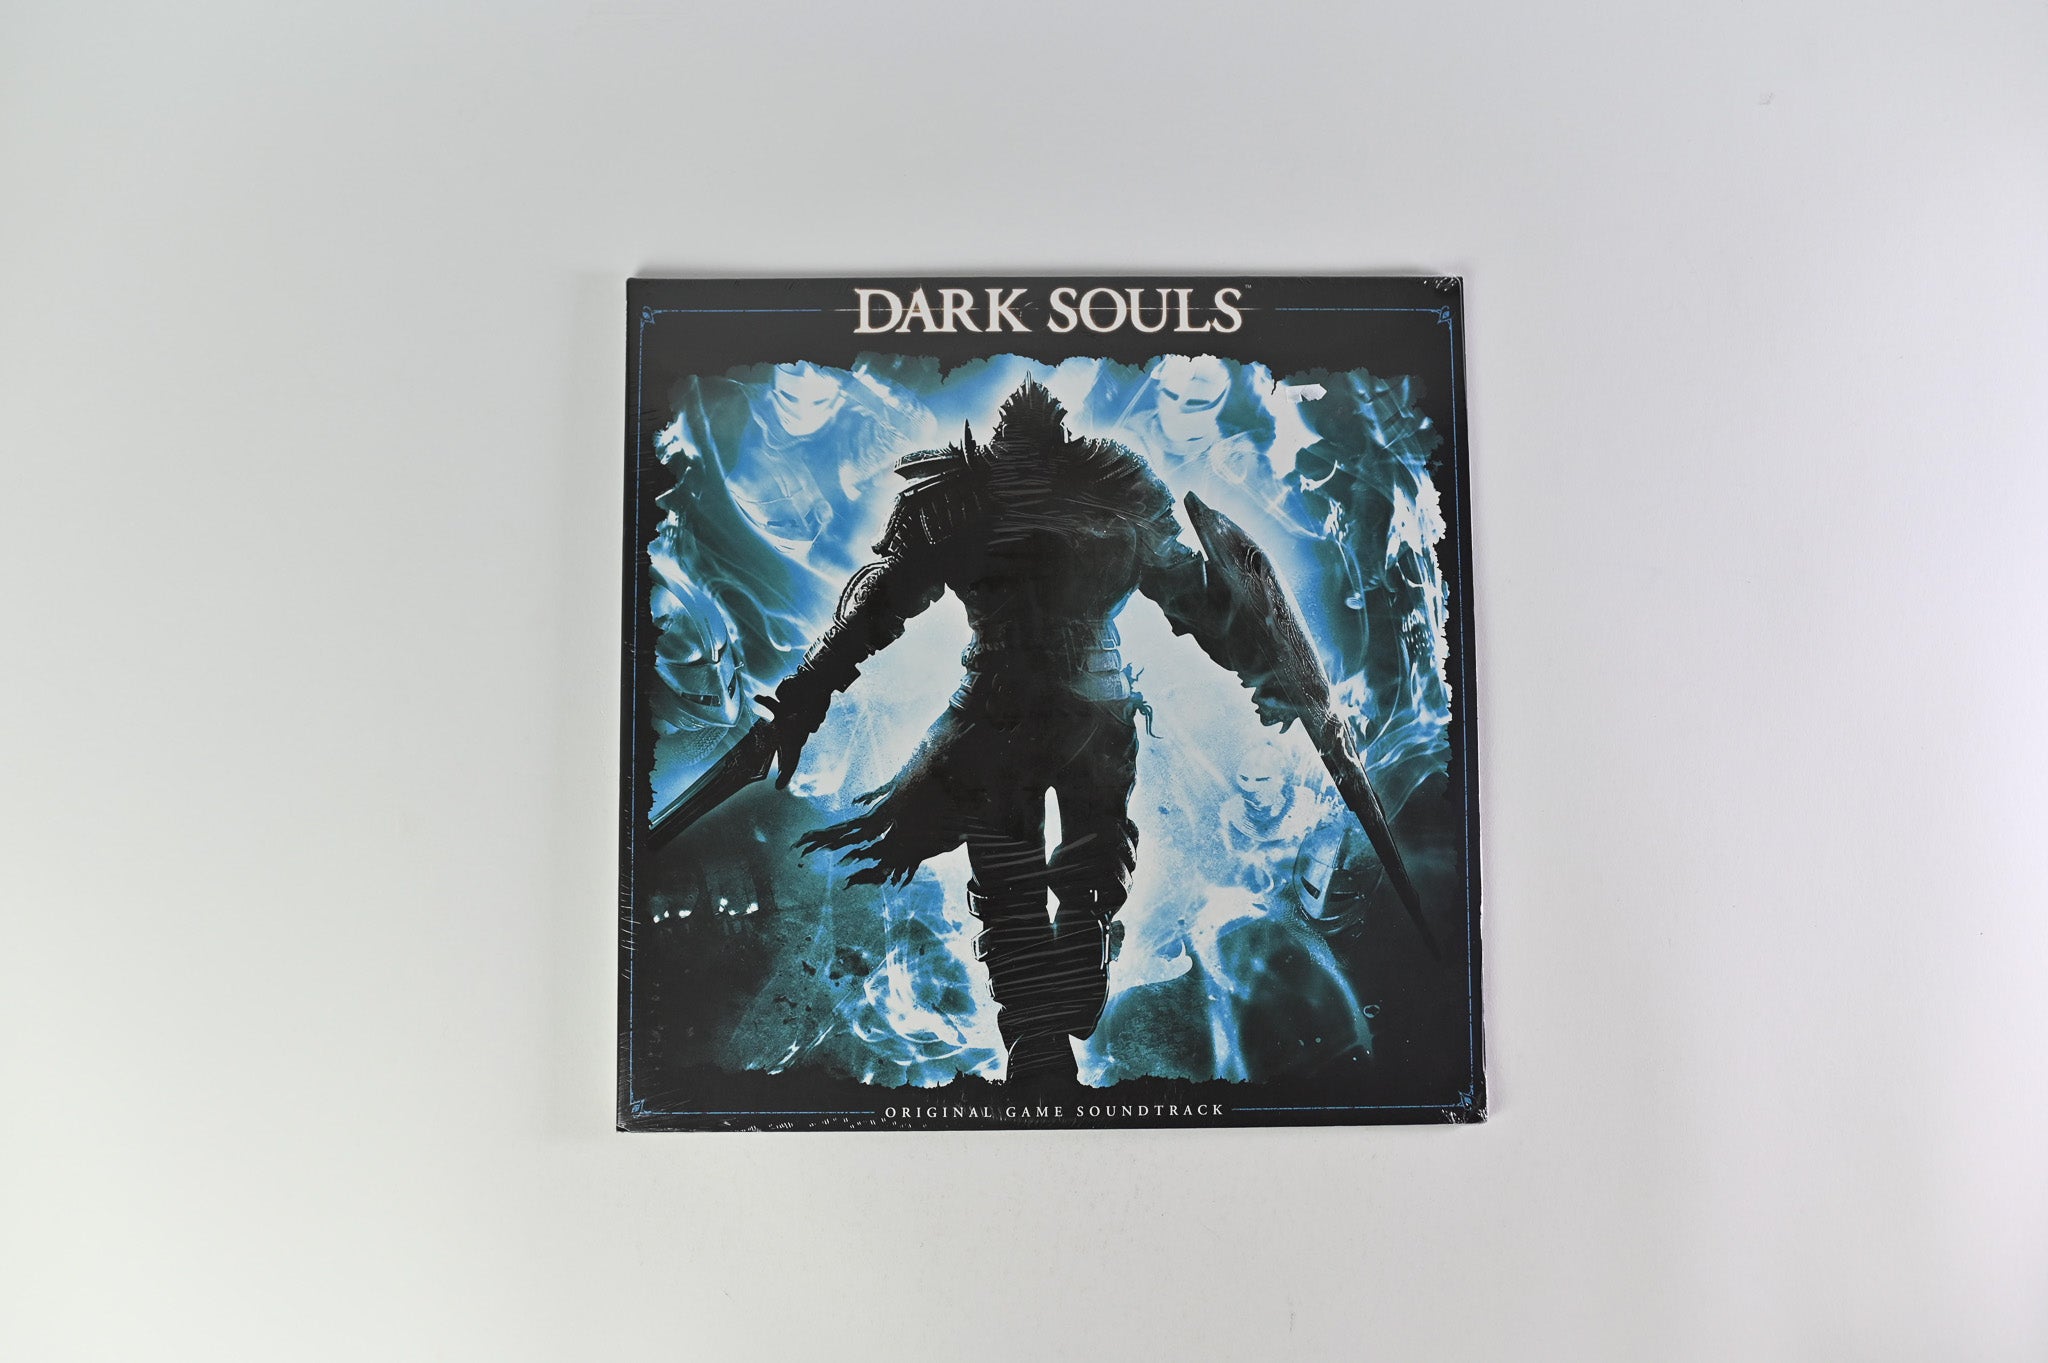 Motoi Sakuraba - Dark Souls (Original Game Soundtrack) on Spacelab9 Ltd Transparent Light Blue with Silver Splatter Sealed